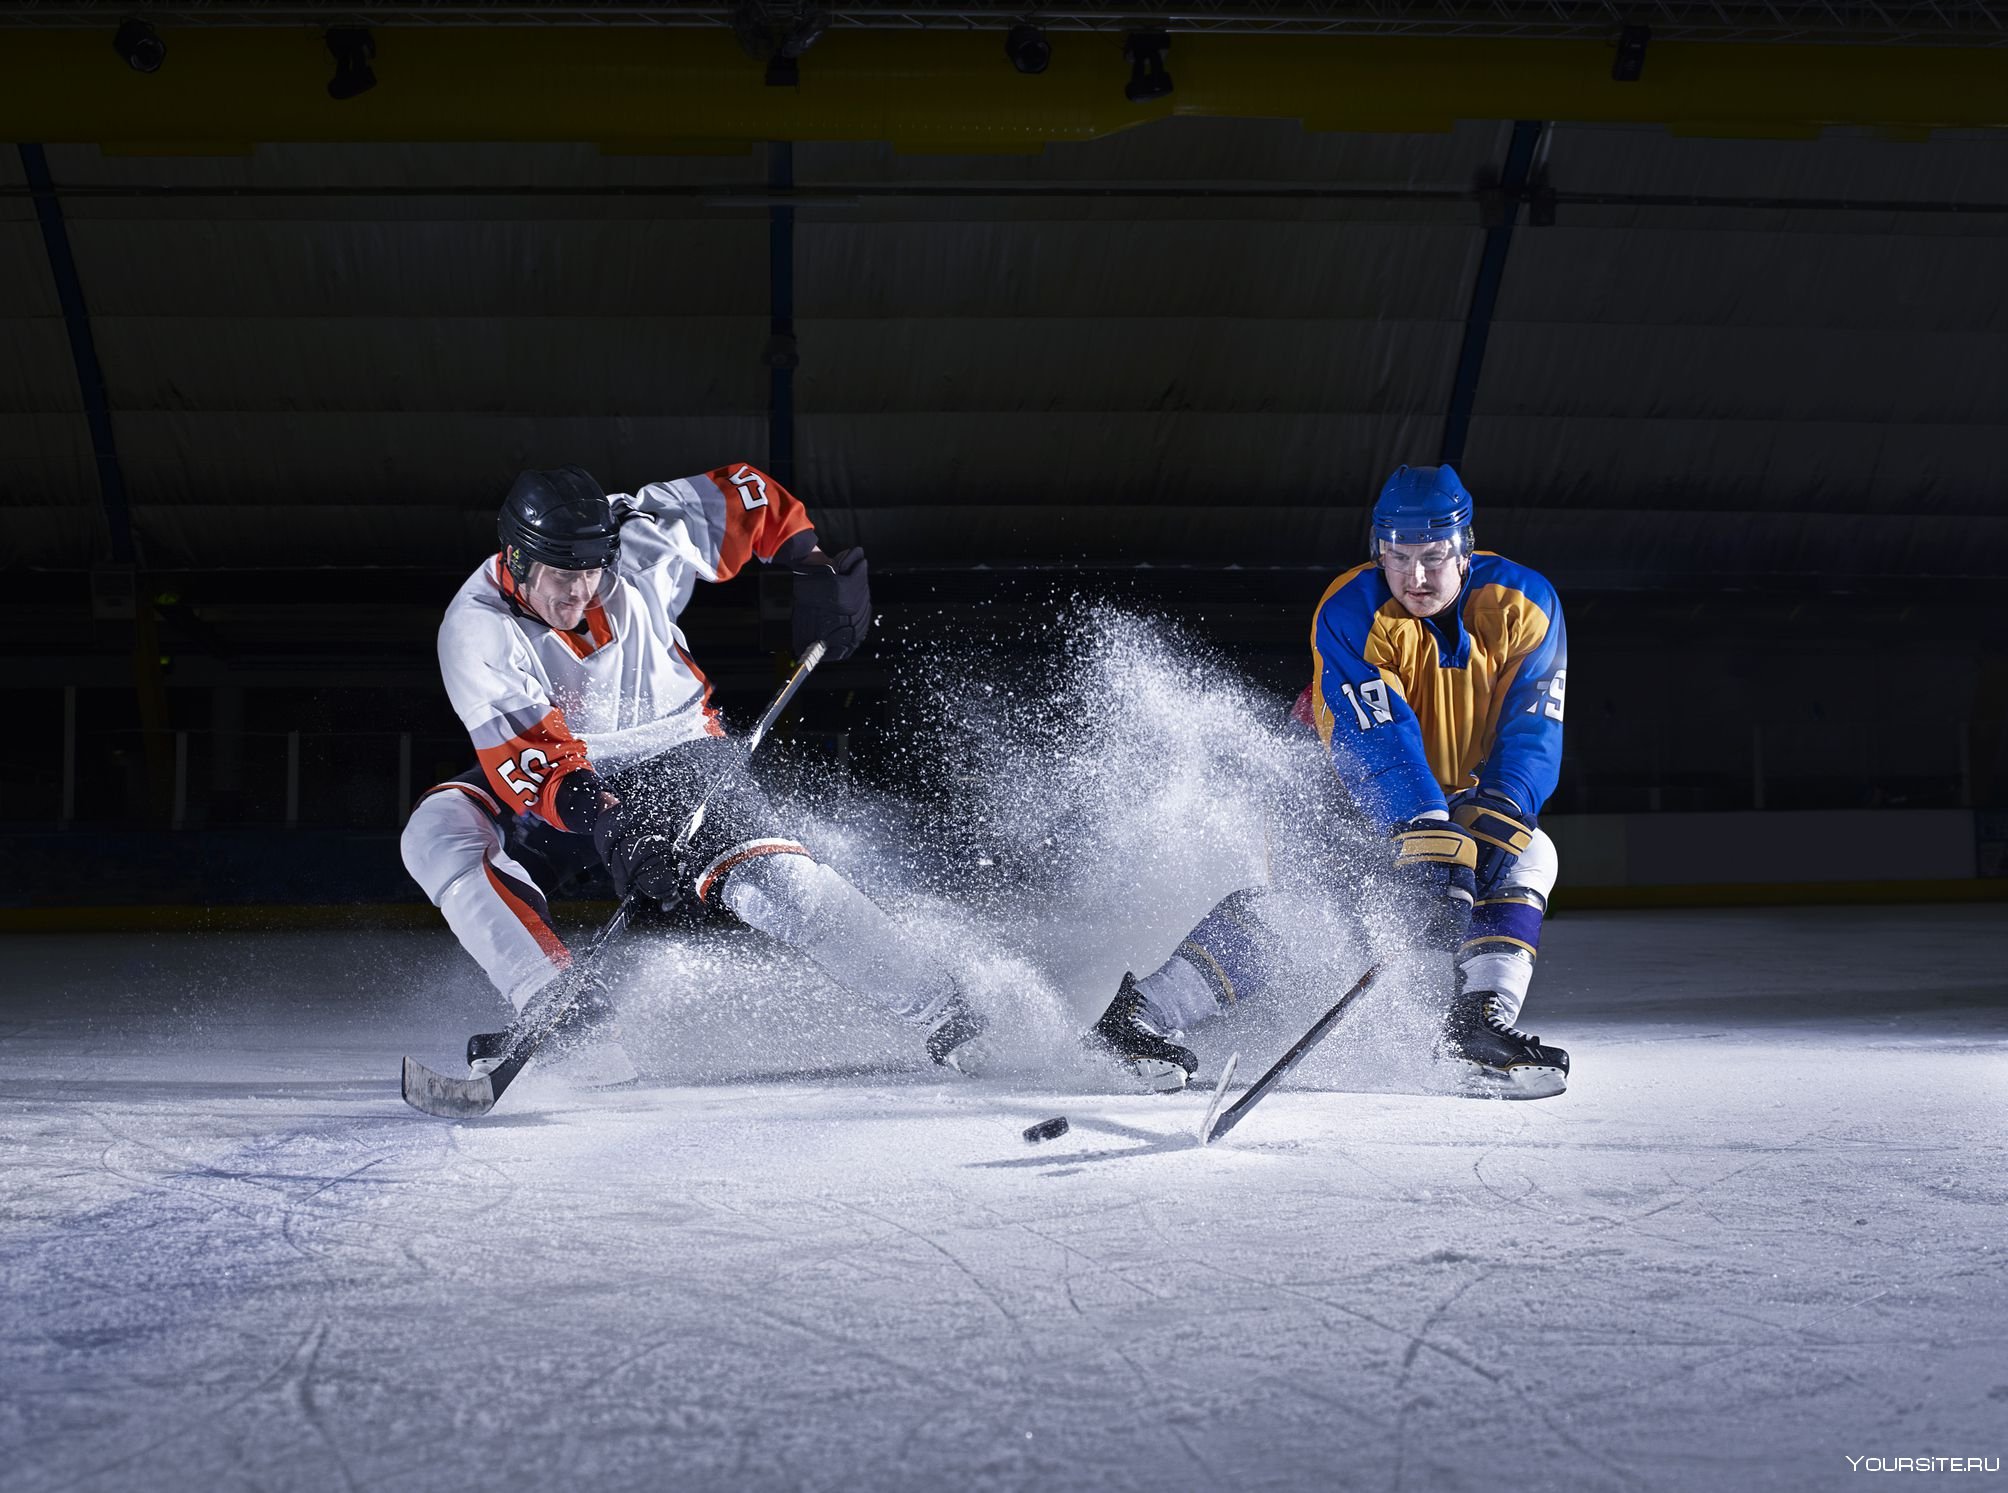 Hockey mos. Хоккей с шайбой, хоккей на льду. Лед хоккей. Шайба для хоккея. Хоккеист на льду.